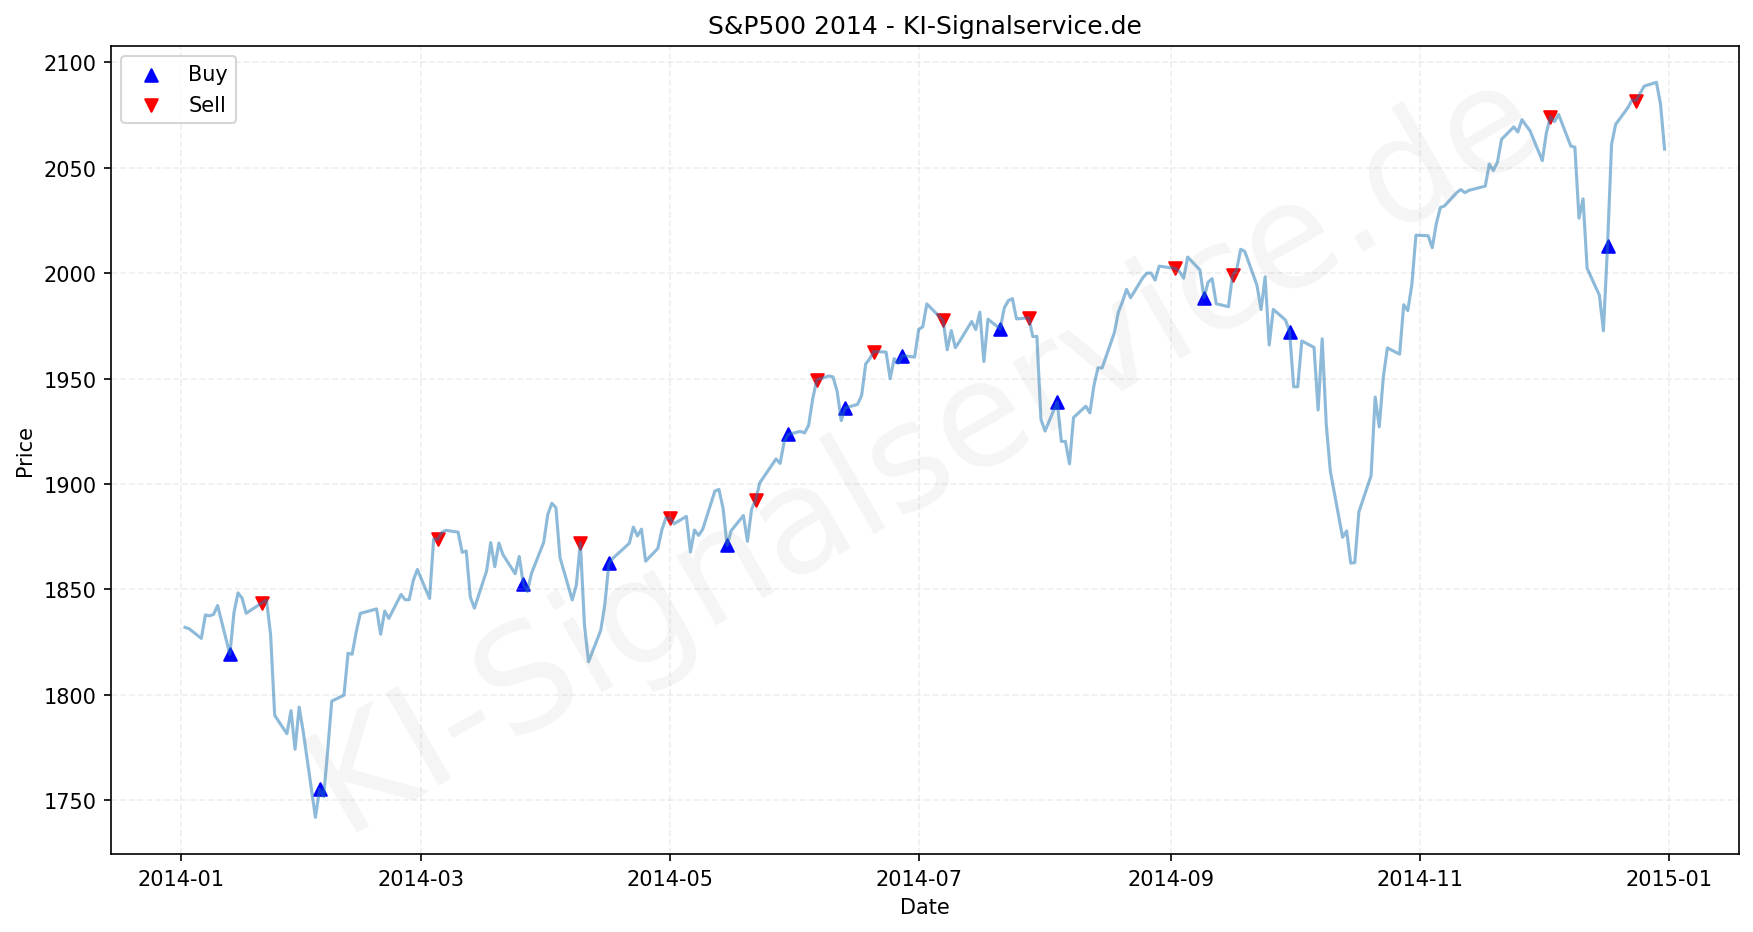 SP500 Index Performance Chart - KI Tradingsignale 2014